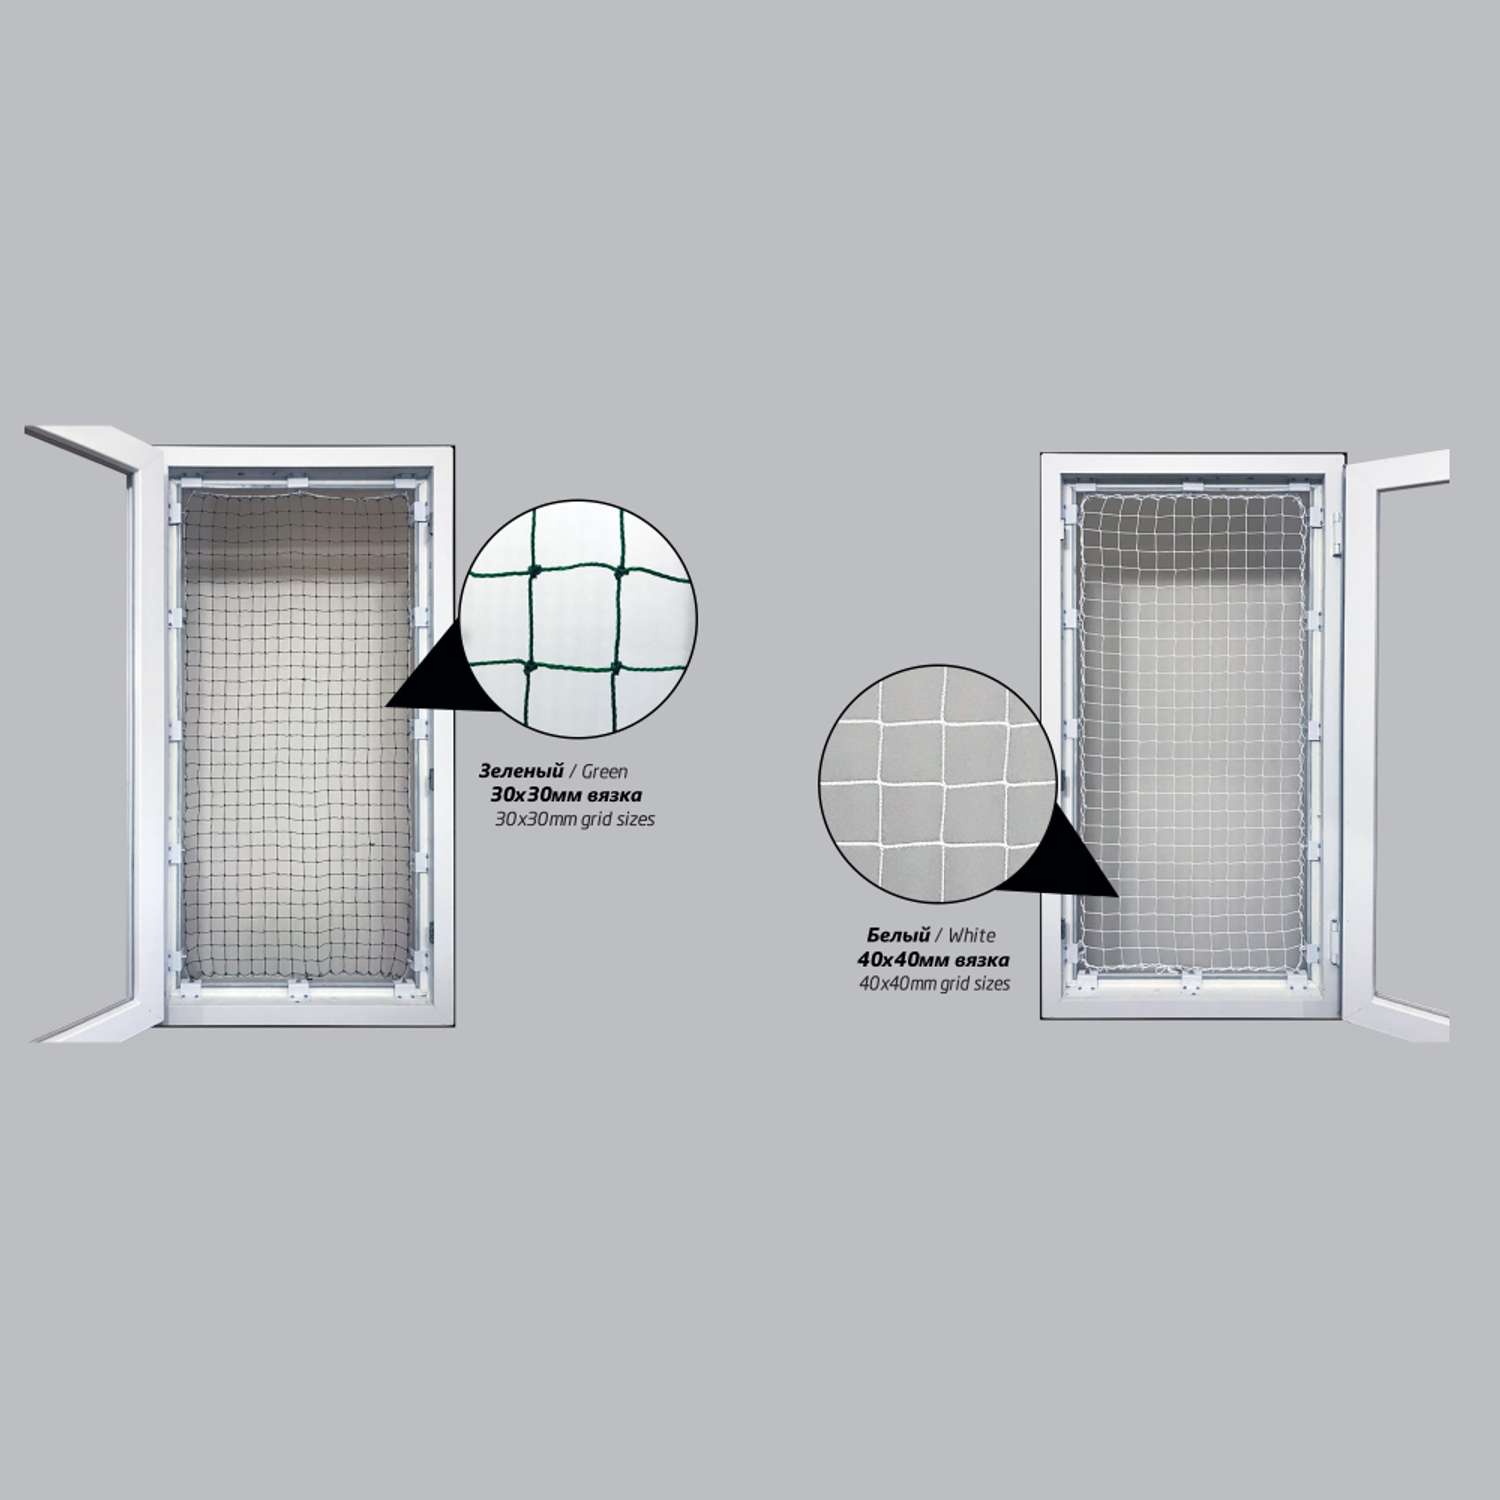 Защитная сетка WINBLOCK на окна для кошек Pets 80х140см черный кронштейн - фото 4